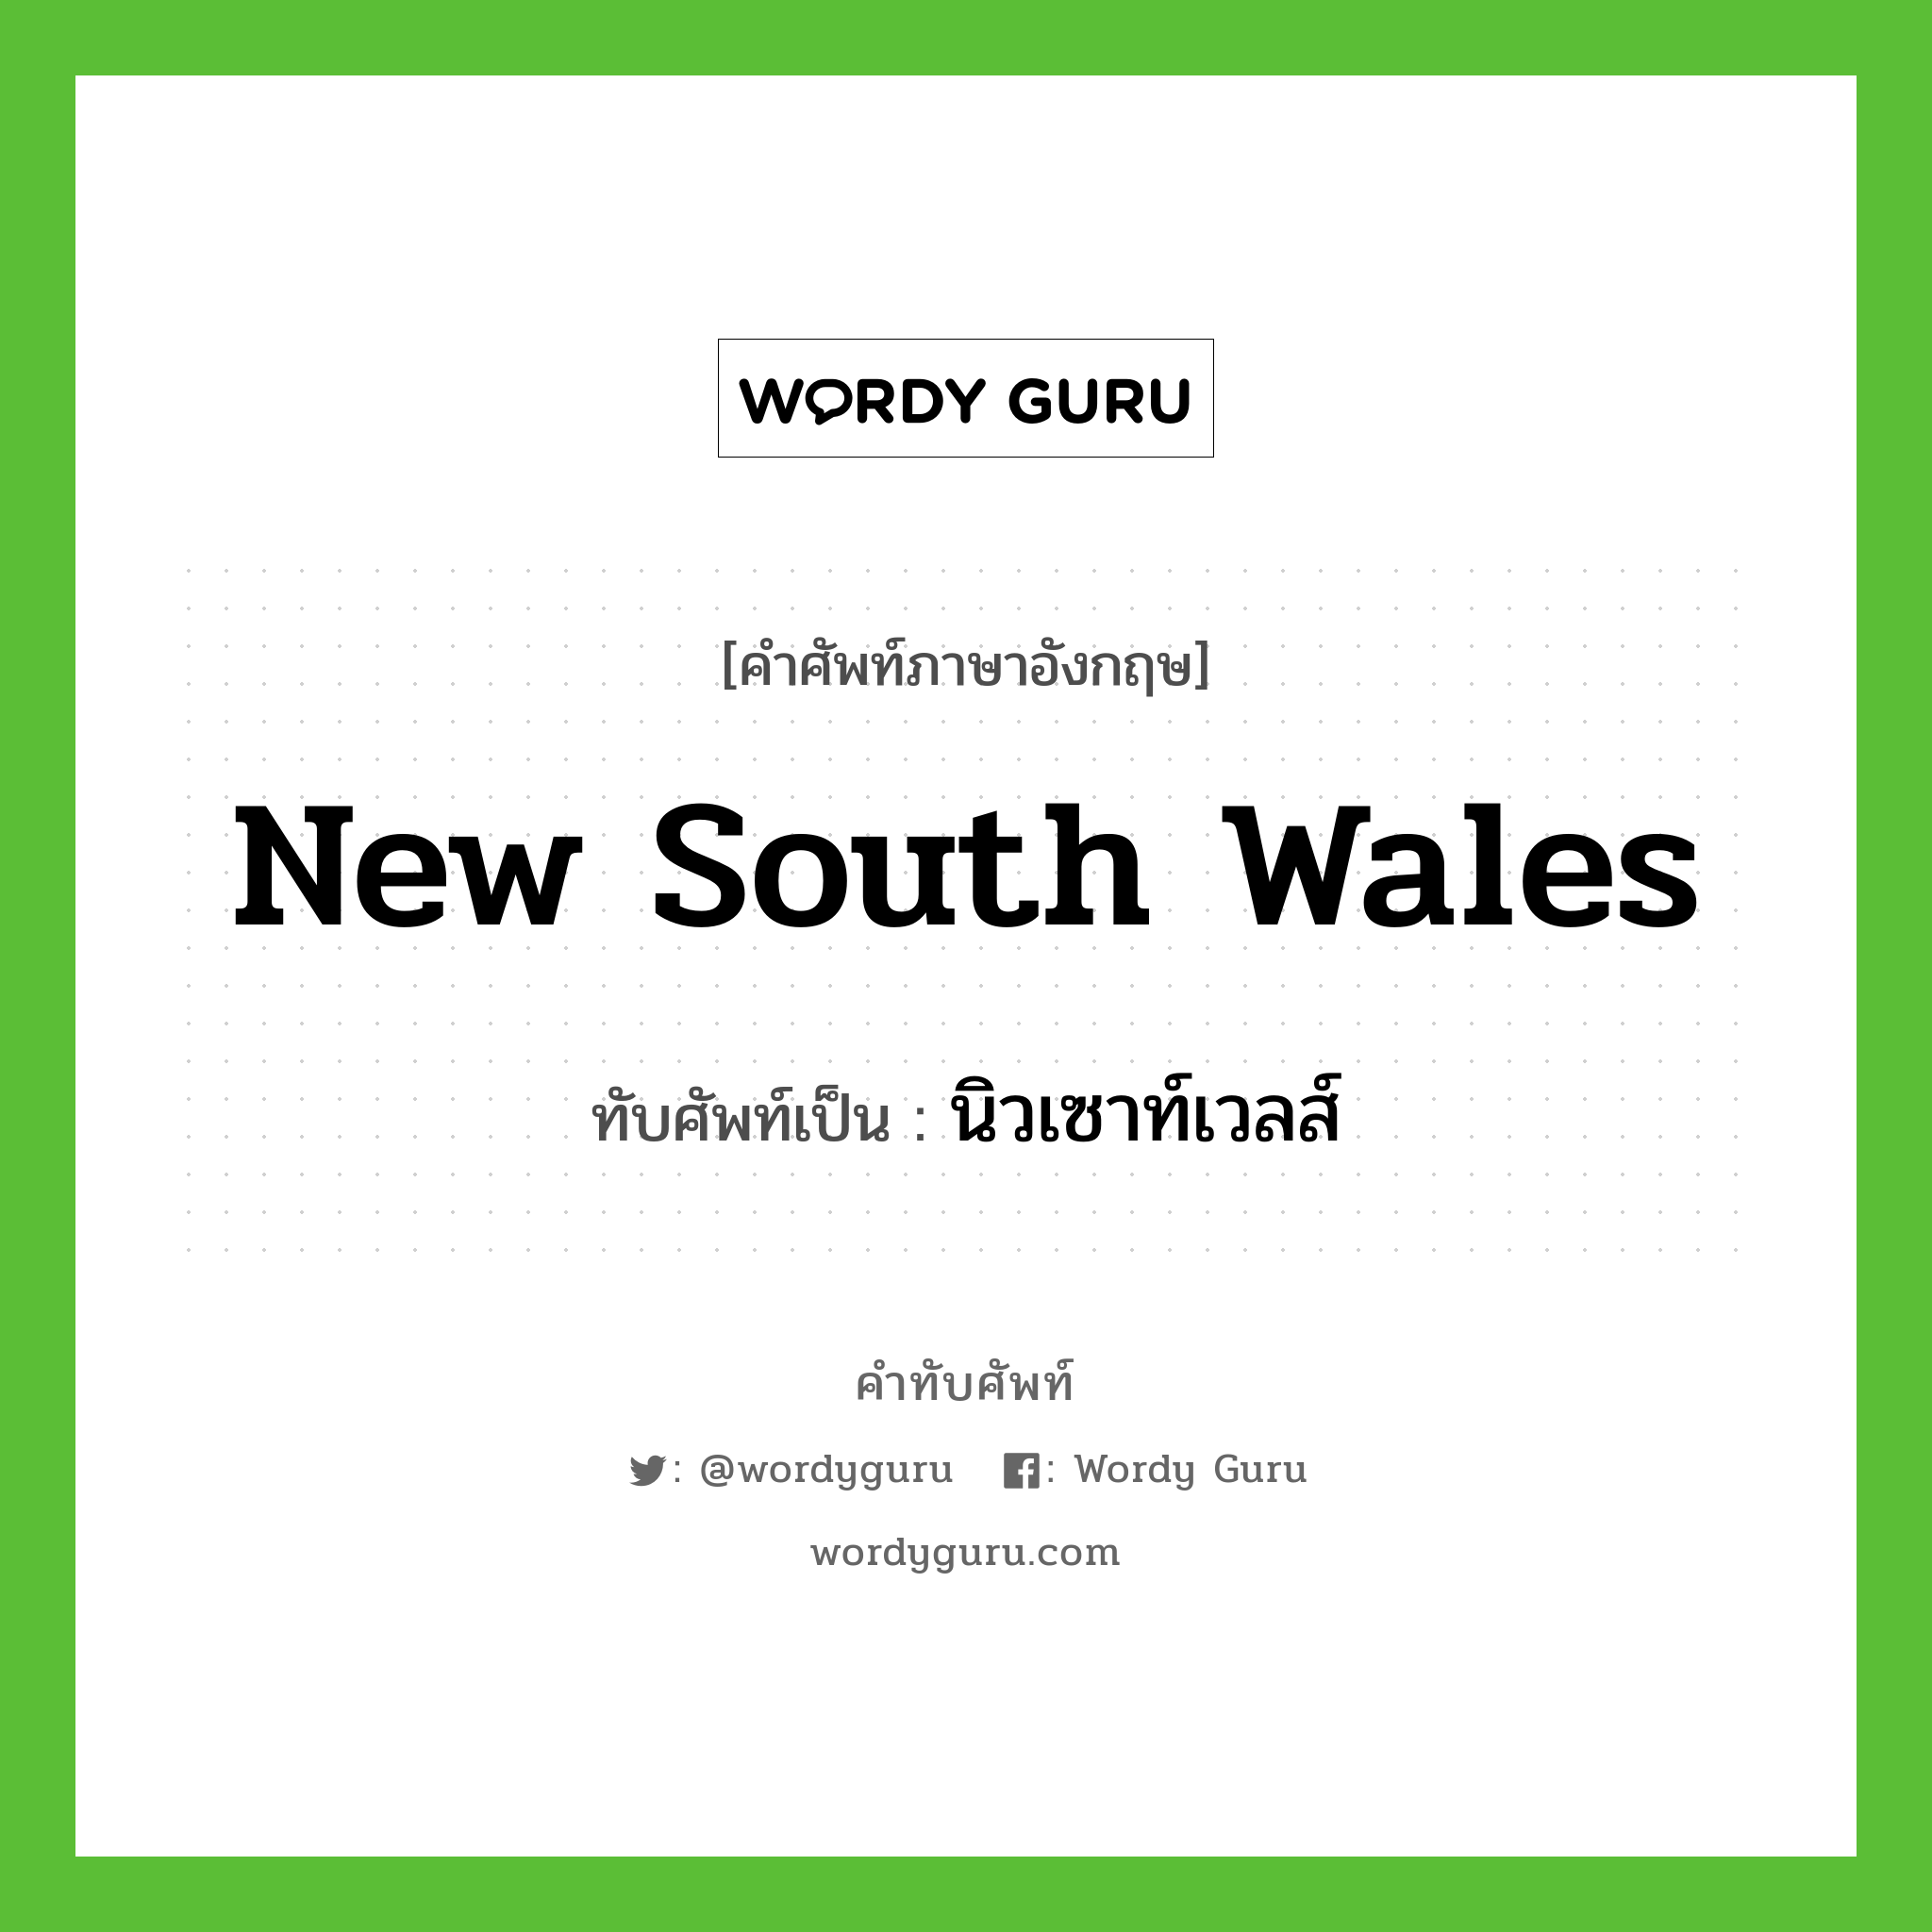 New South Wales เขียนเป็นคำไทยว่าอะไร?, คำศัพท์ภาษาอังกฤษ New South Wales ทับศัพท์เป็น นิวเซาท์เวลส์